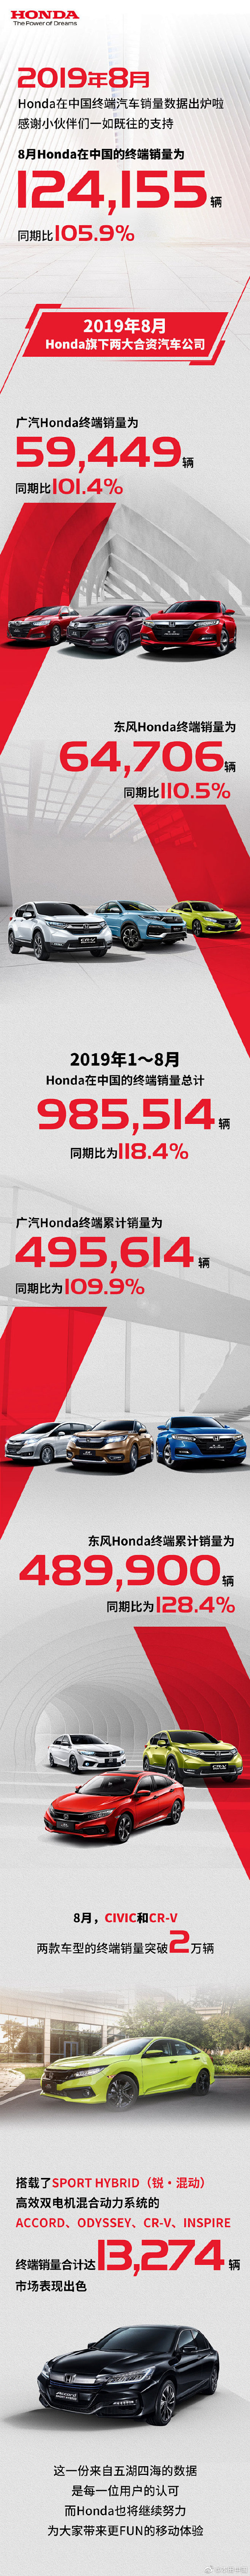 #Honda News#新的终端汽车销量...